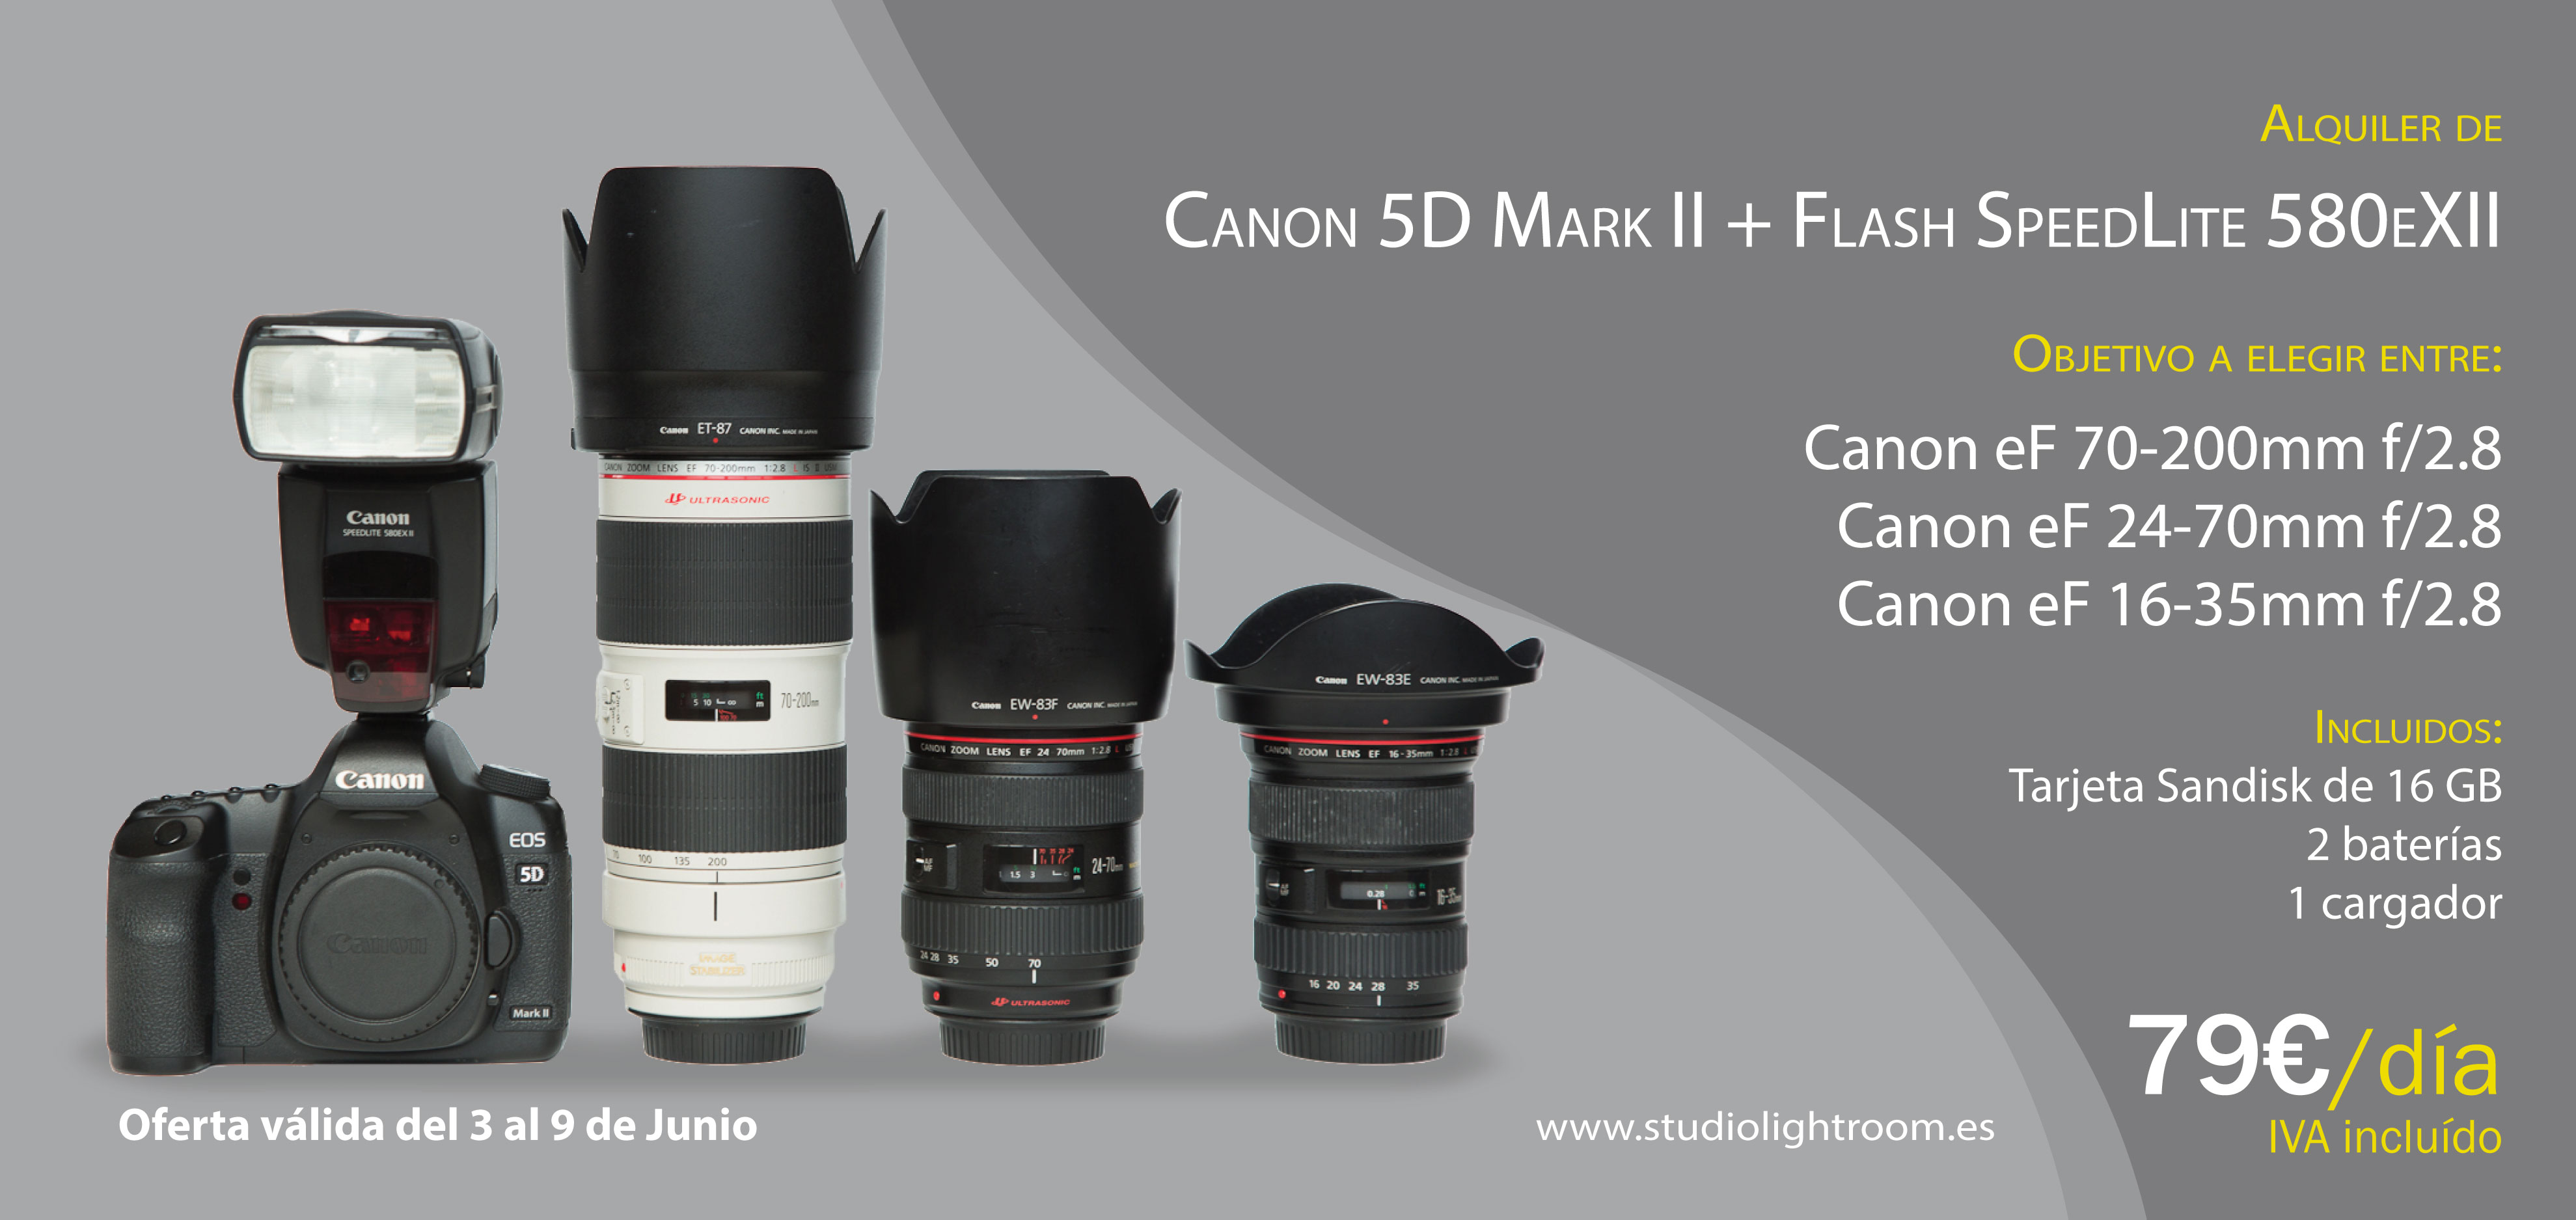 Canon 5D + flash + objetivo